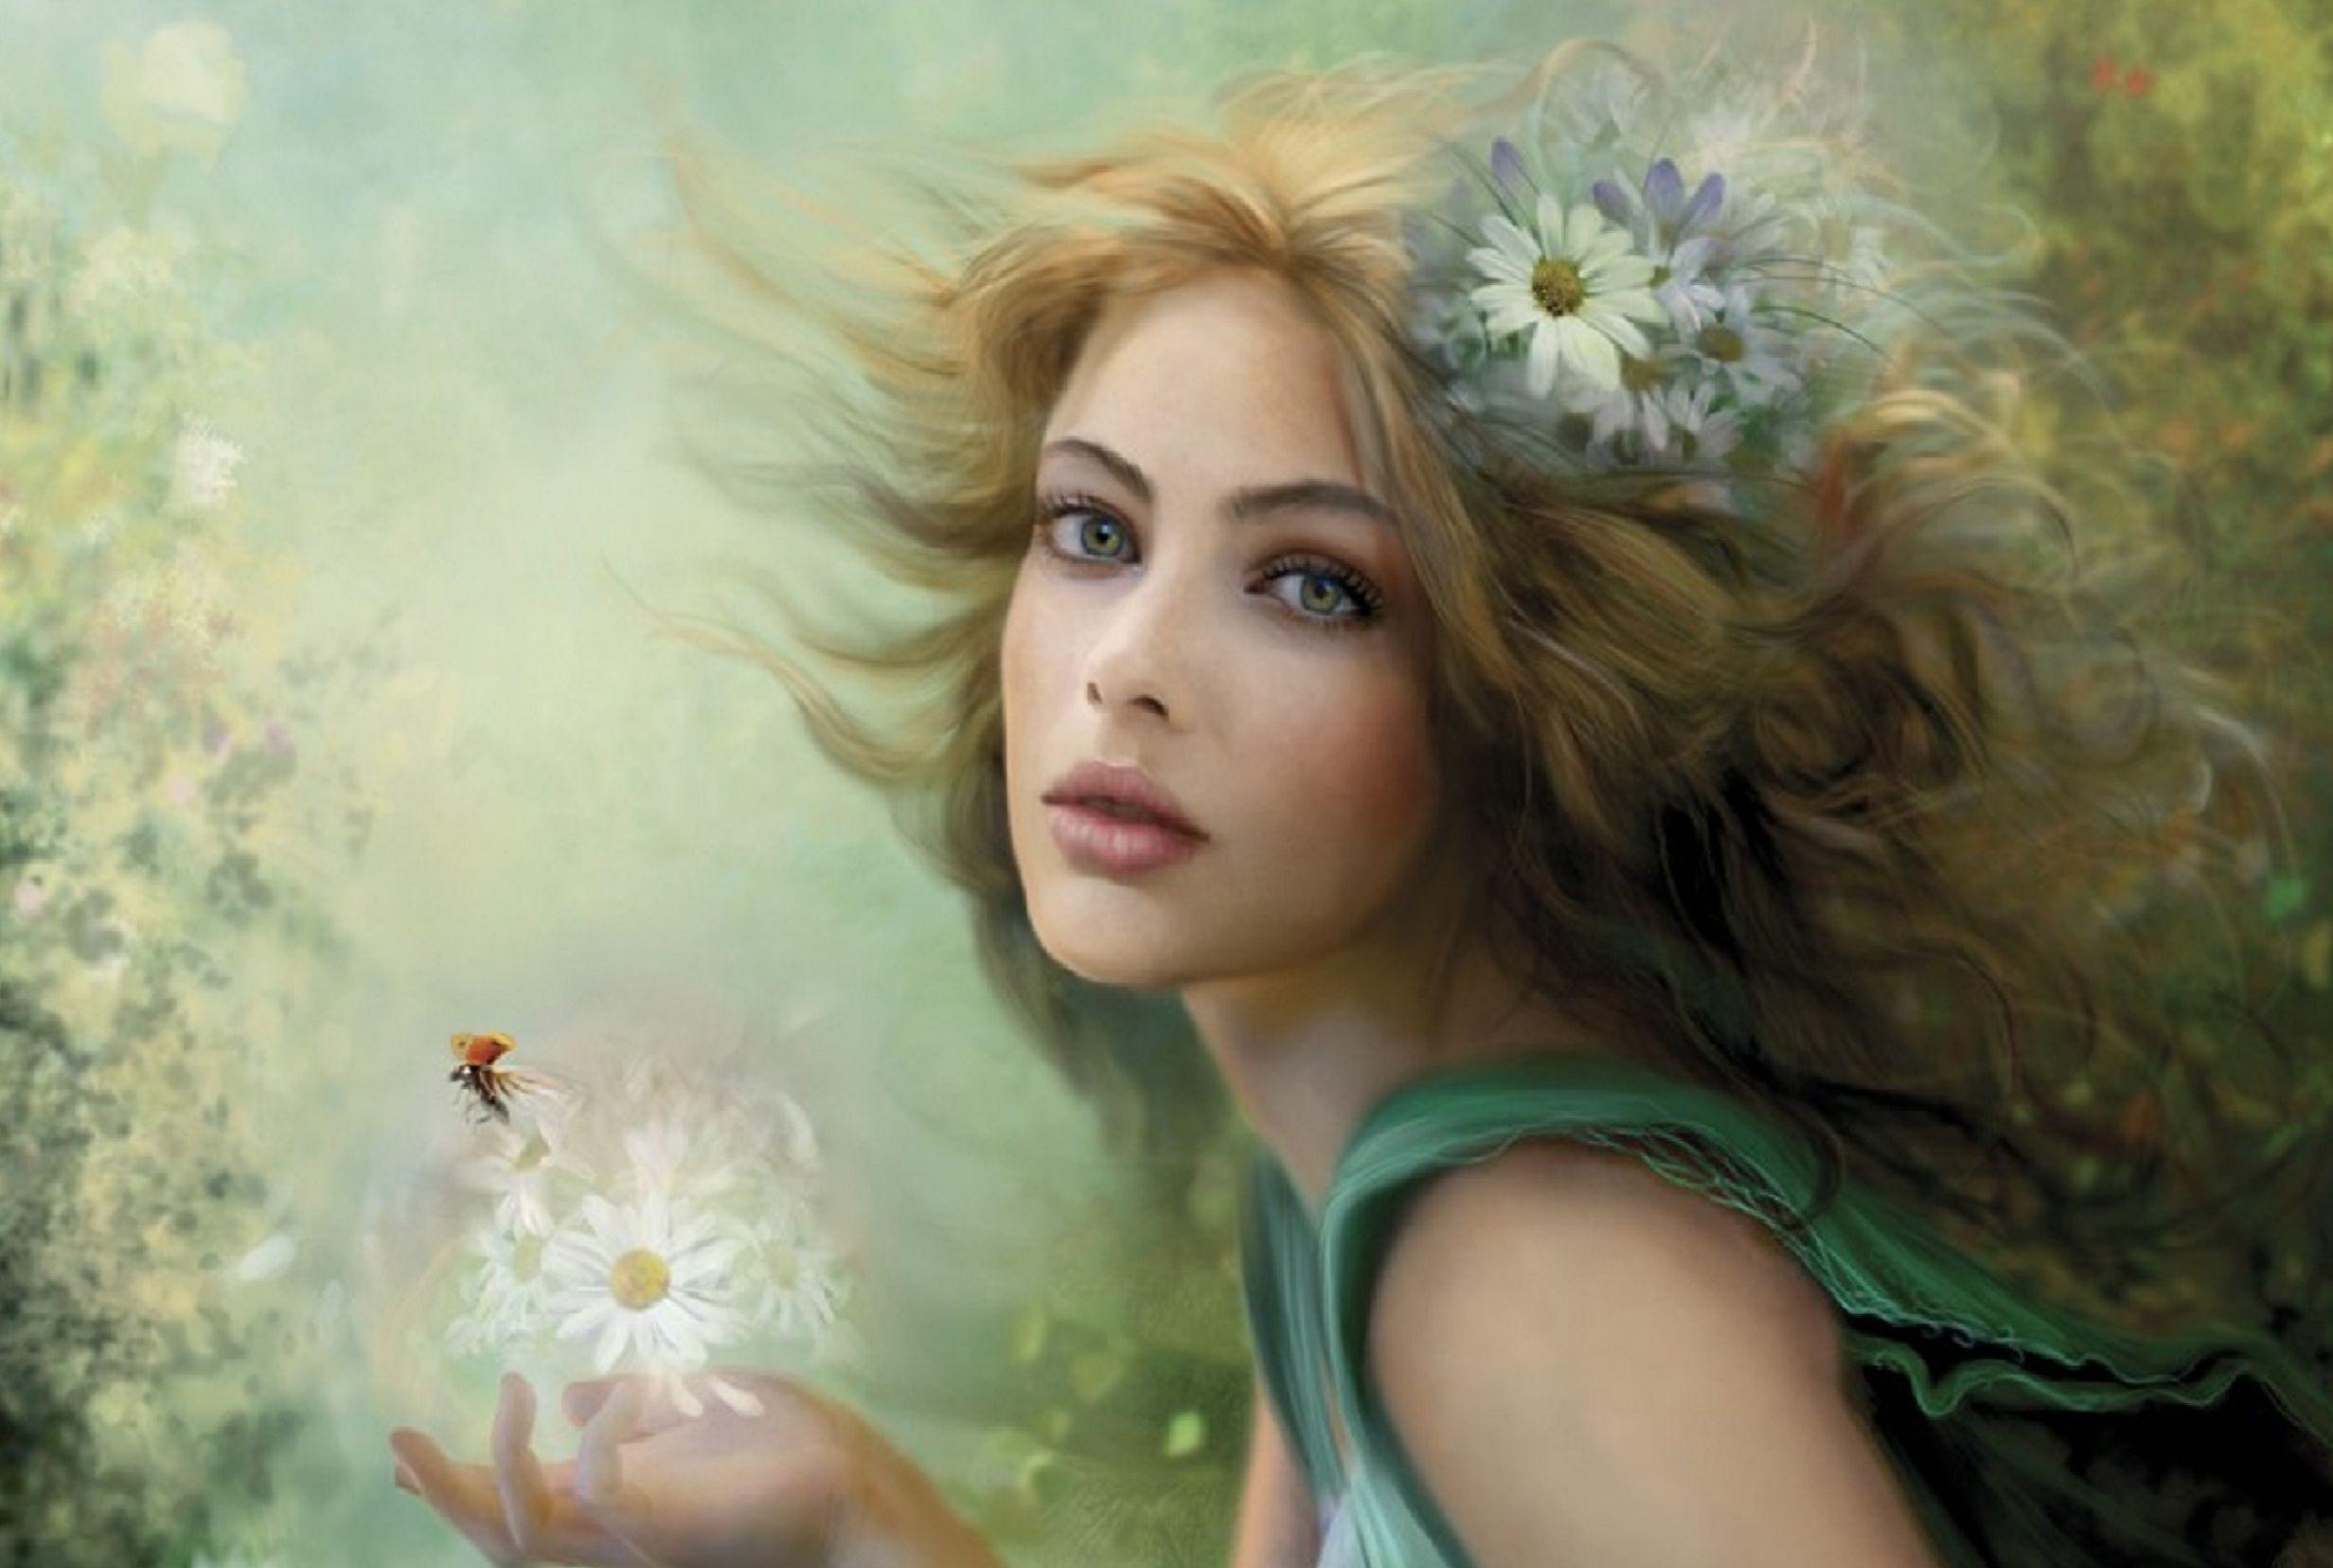 Download 0x0 Fantasy Women Wallpaper Background. Fairy Wallpaper, Art Girl, Art